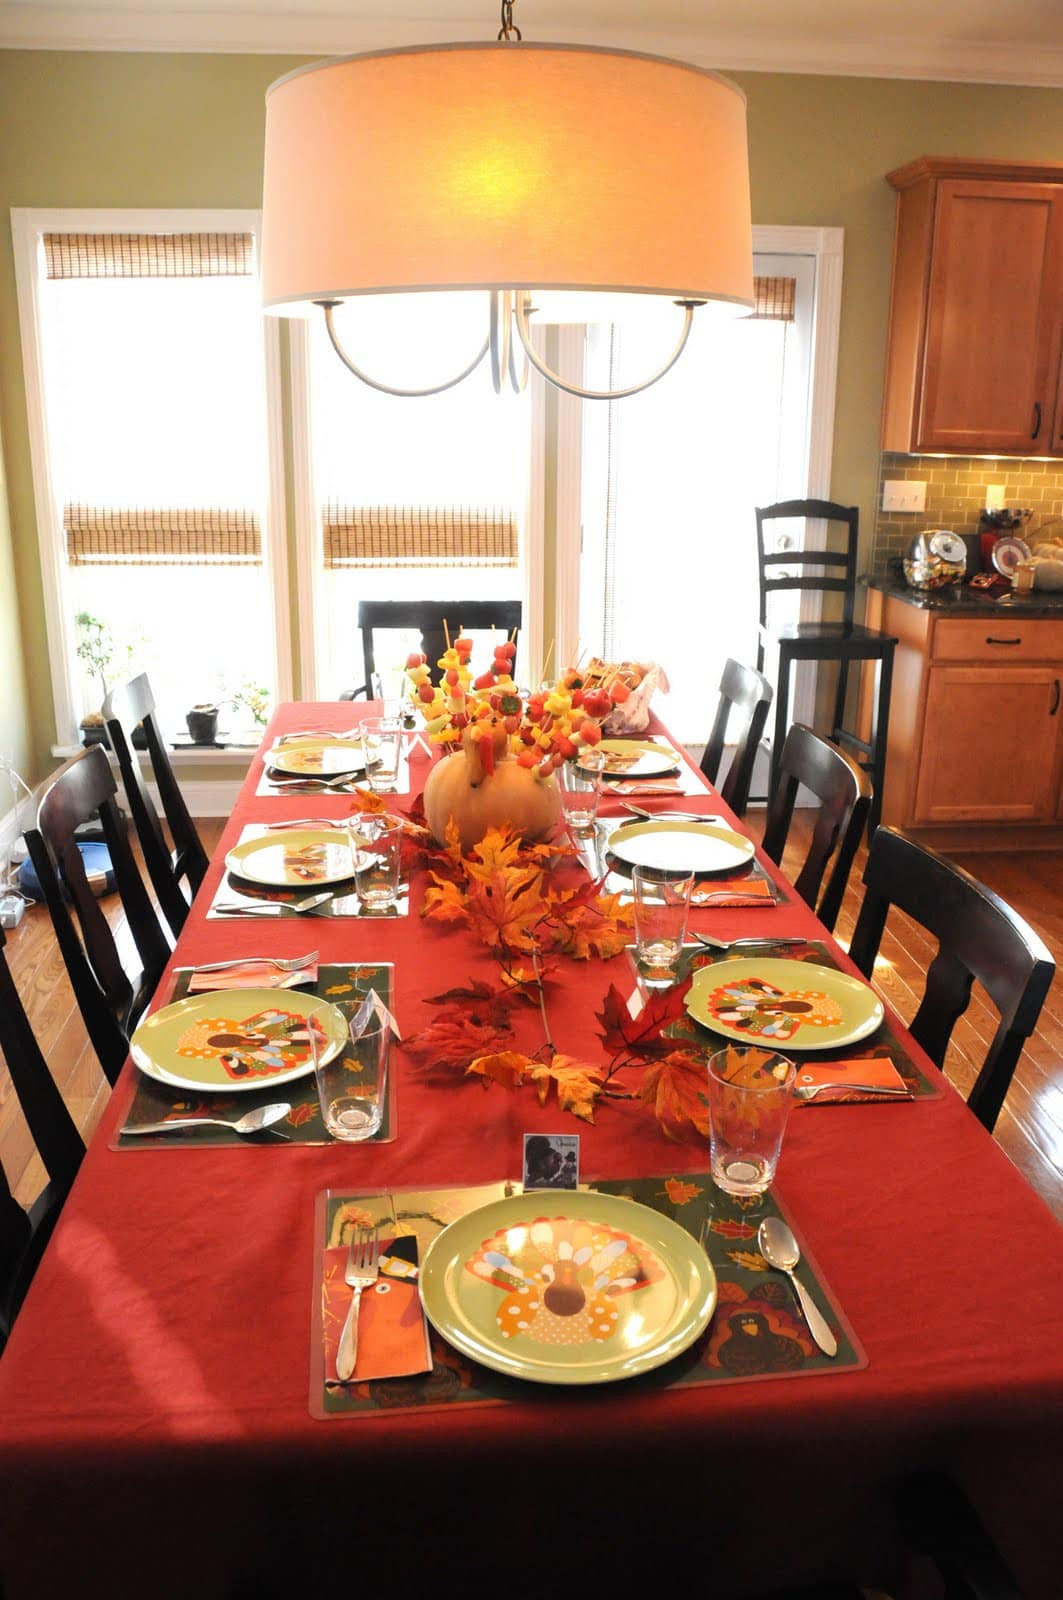 Thanksgiving Table Decorations Ideas
 Thanksgiving Decor The Polkadot Chair